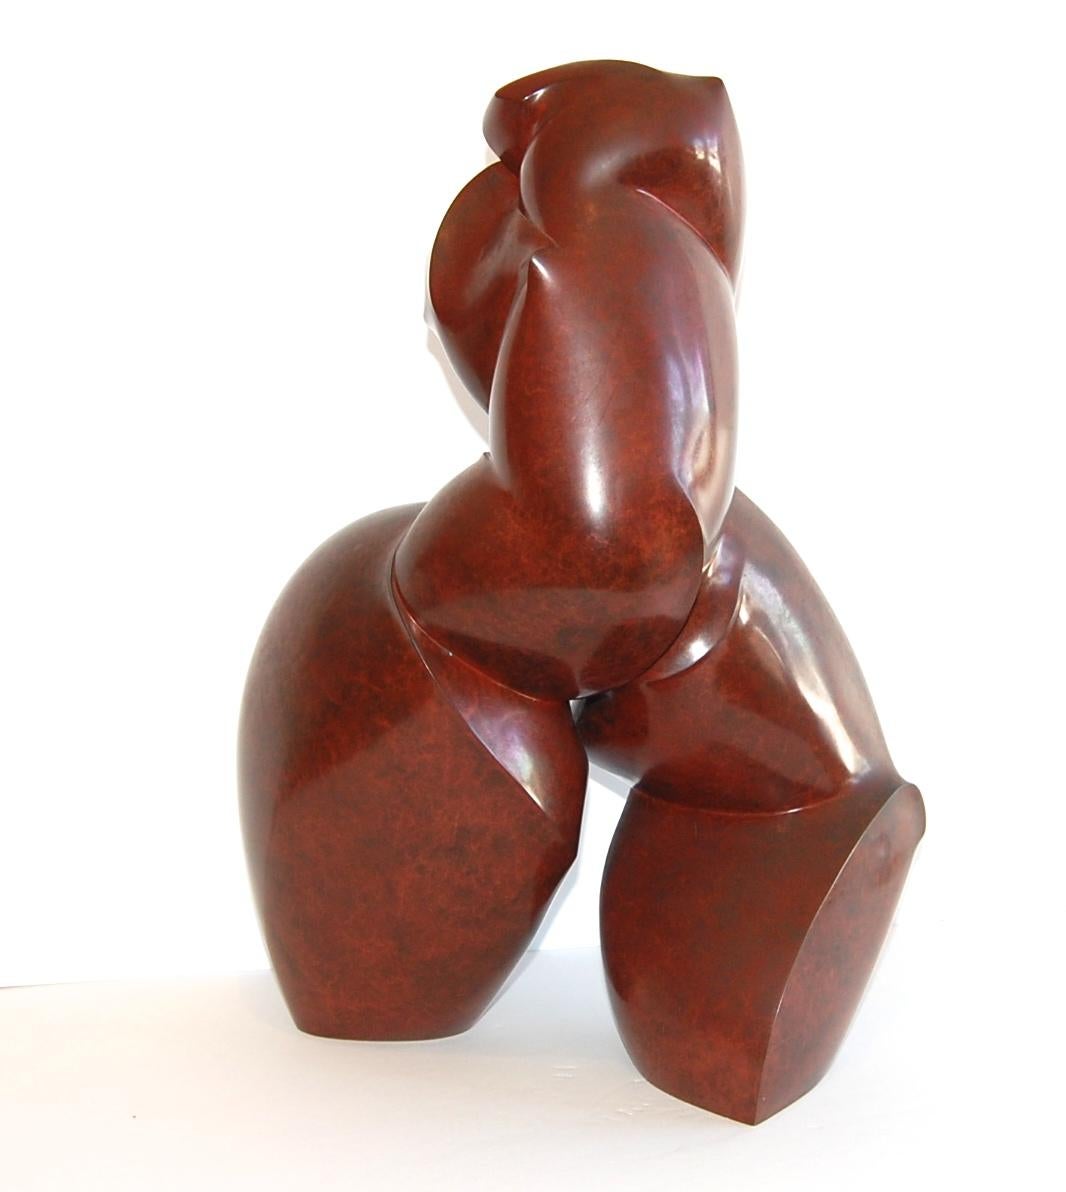 Dominique Polles  Nude Sculpture - Dominique Polies Nude Bronze Sculpture